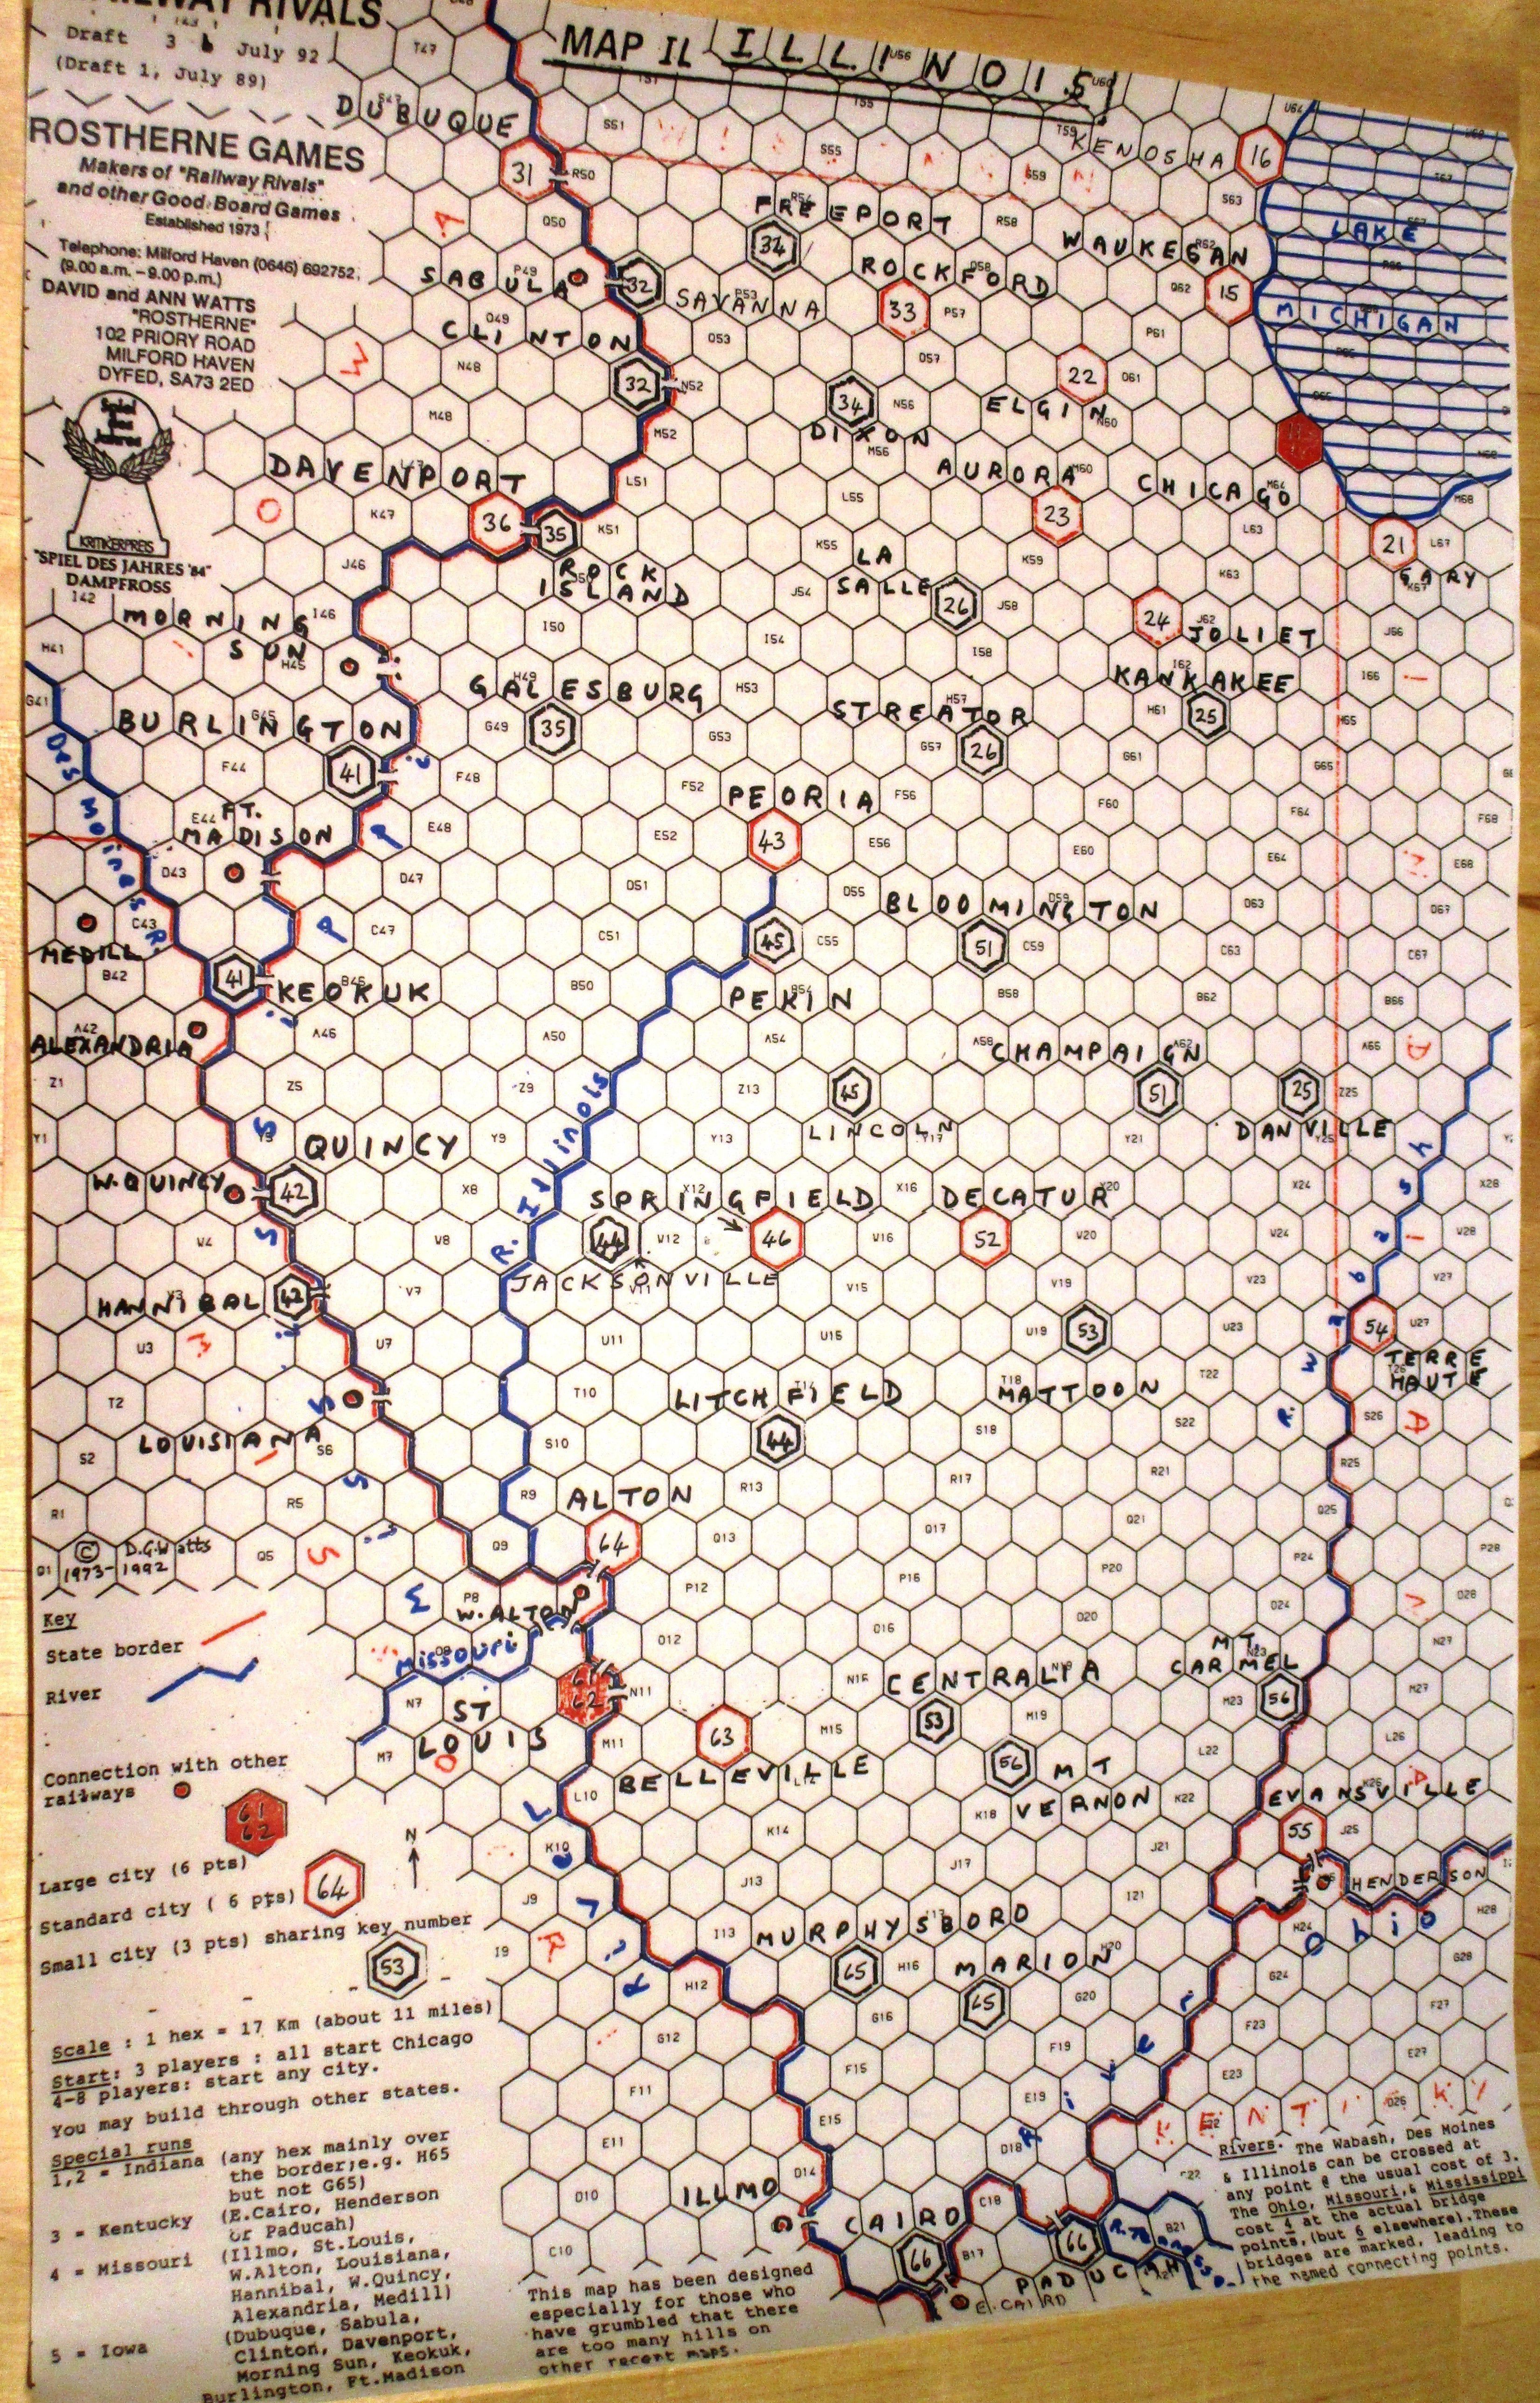 Railway Rivals Map IL: Illinois